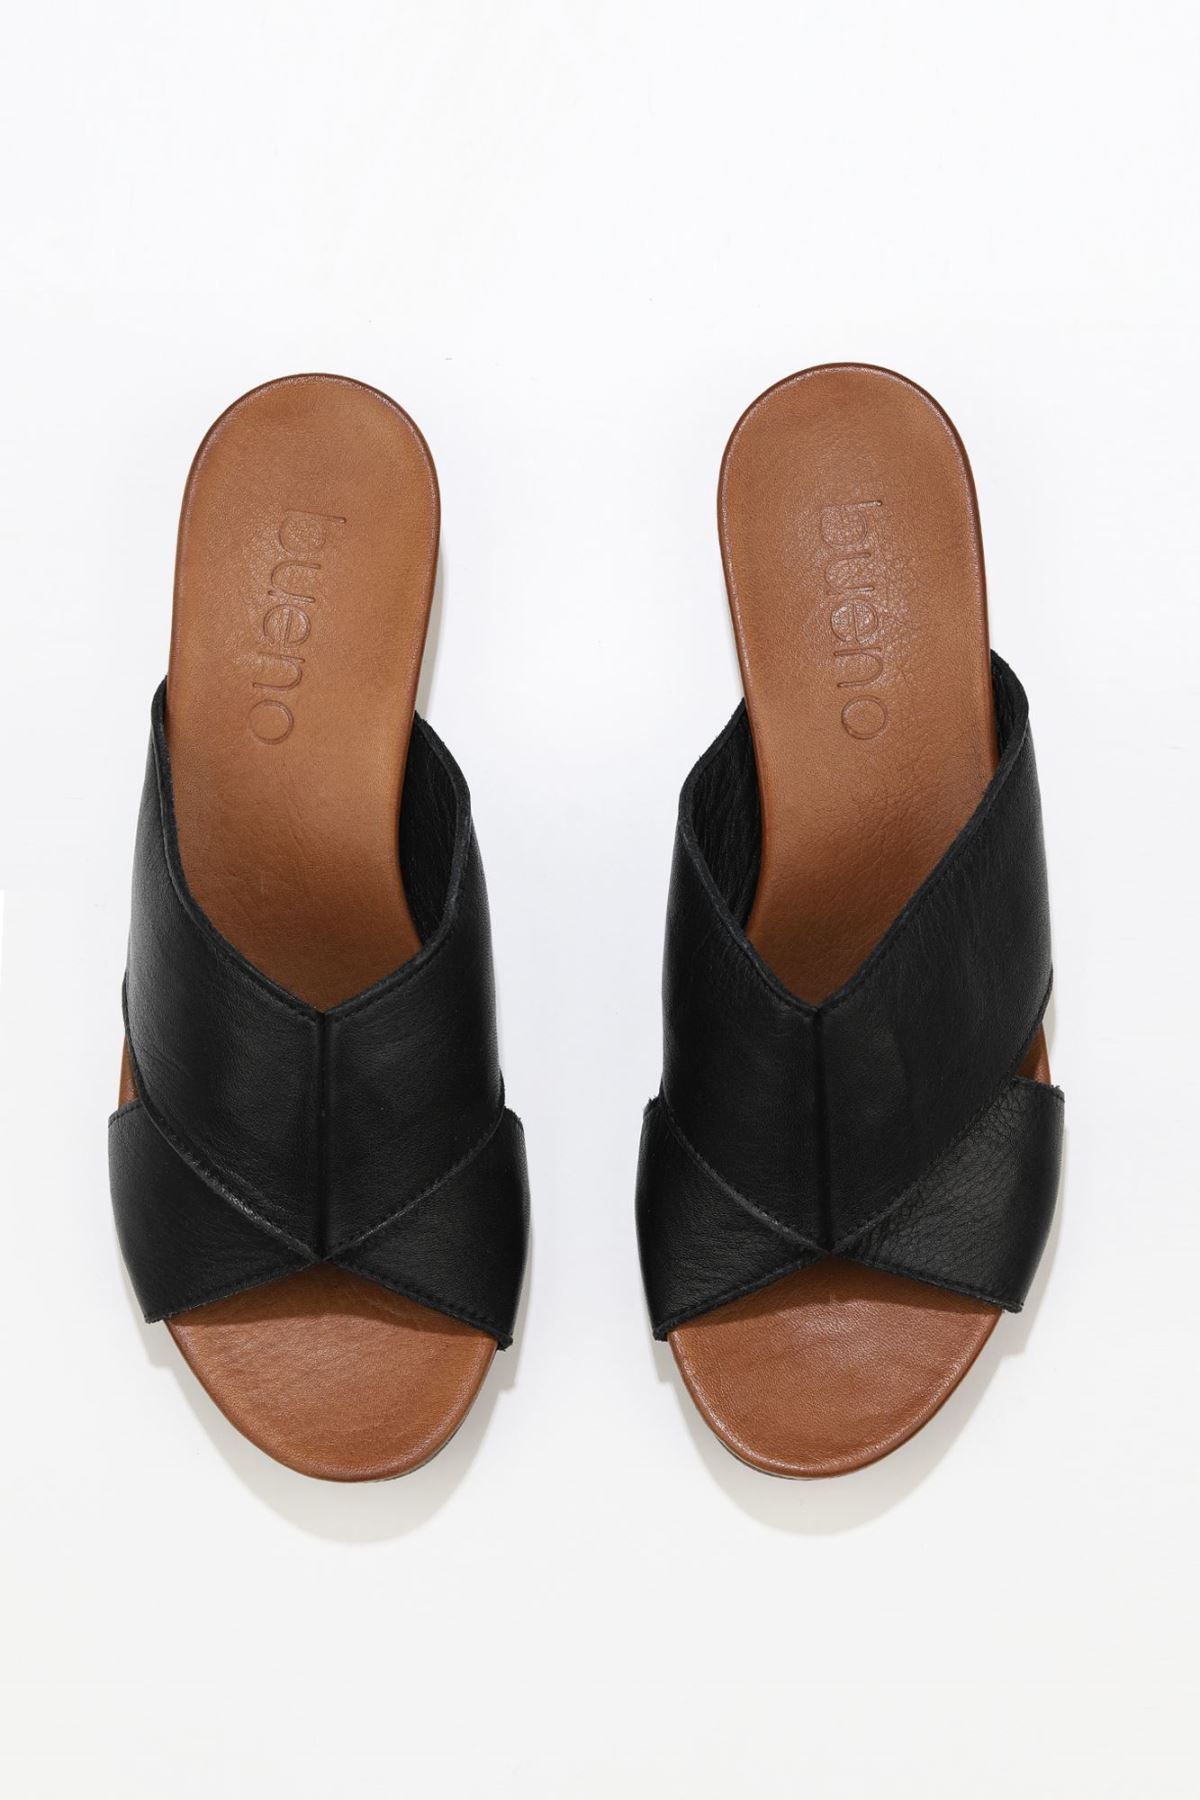 BUENO Shoes Siyah Deri Kadın Topuklu Terlik